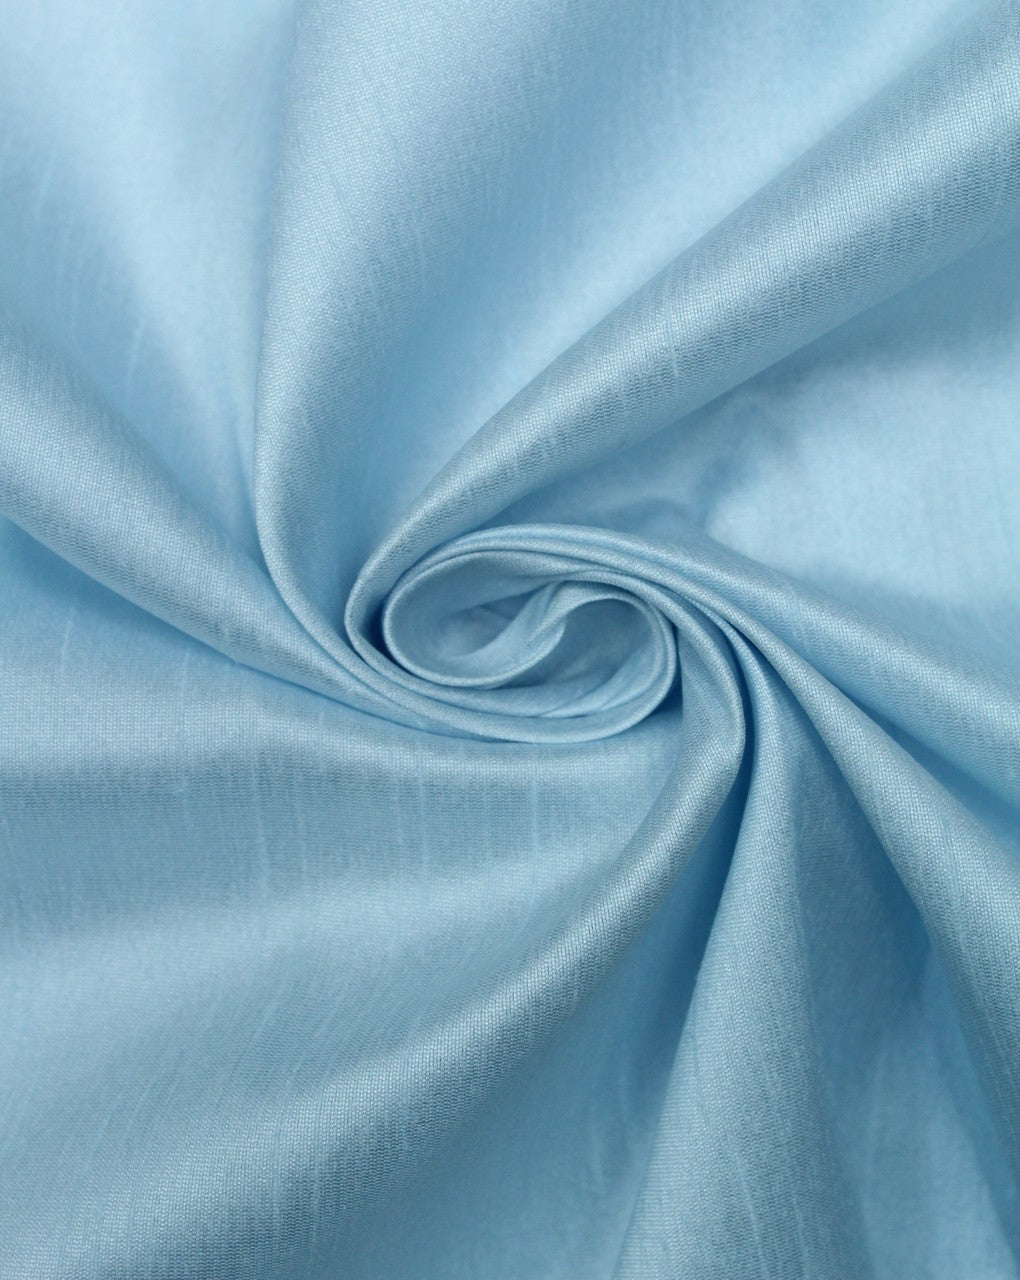 Plain Light Blue Poly Dupion Fabric